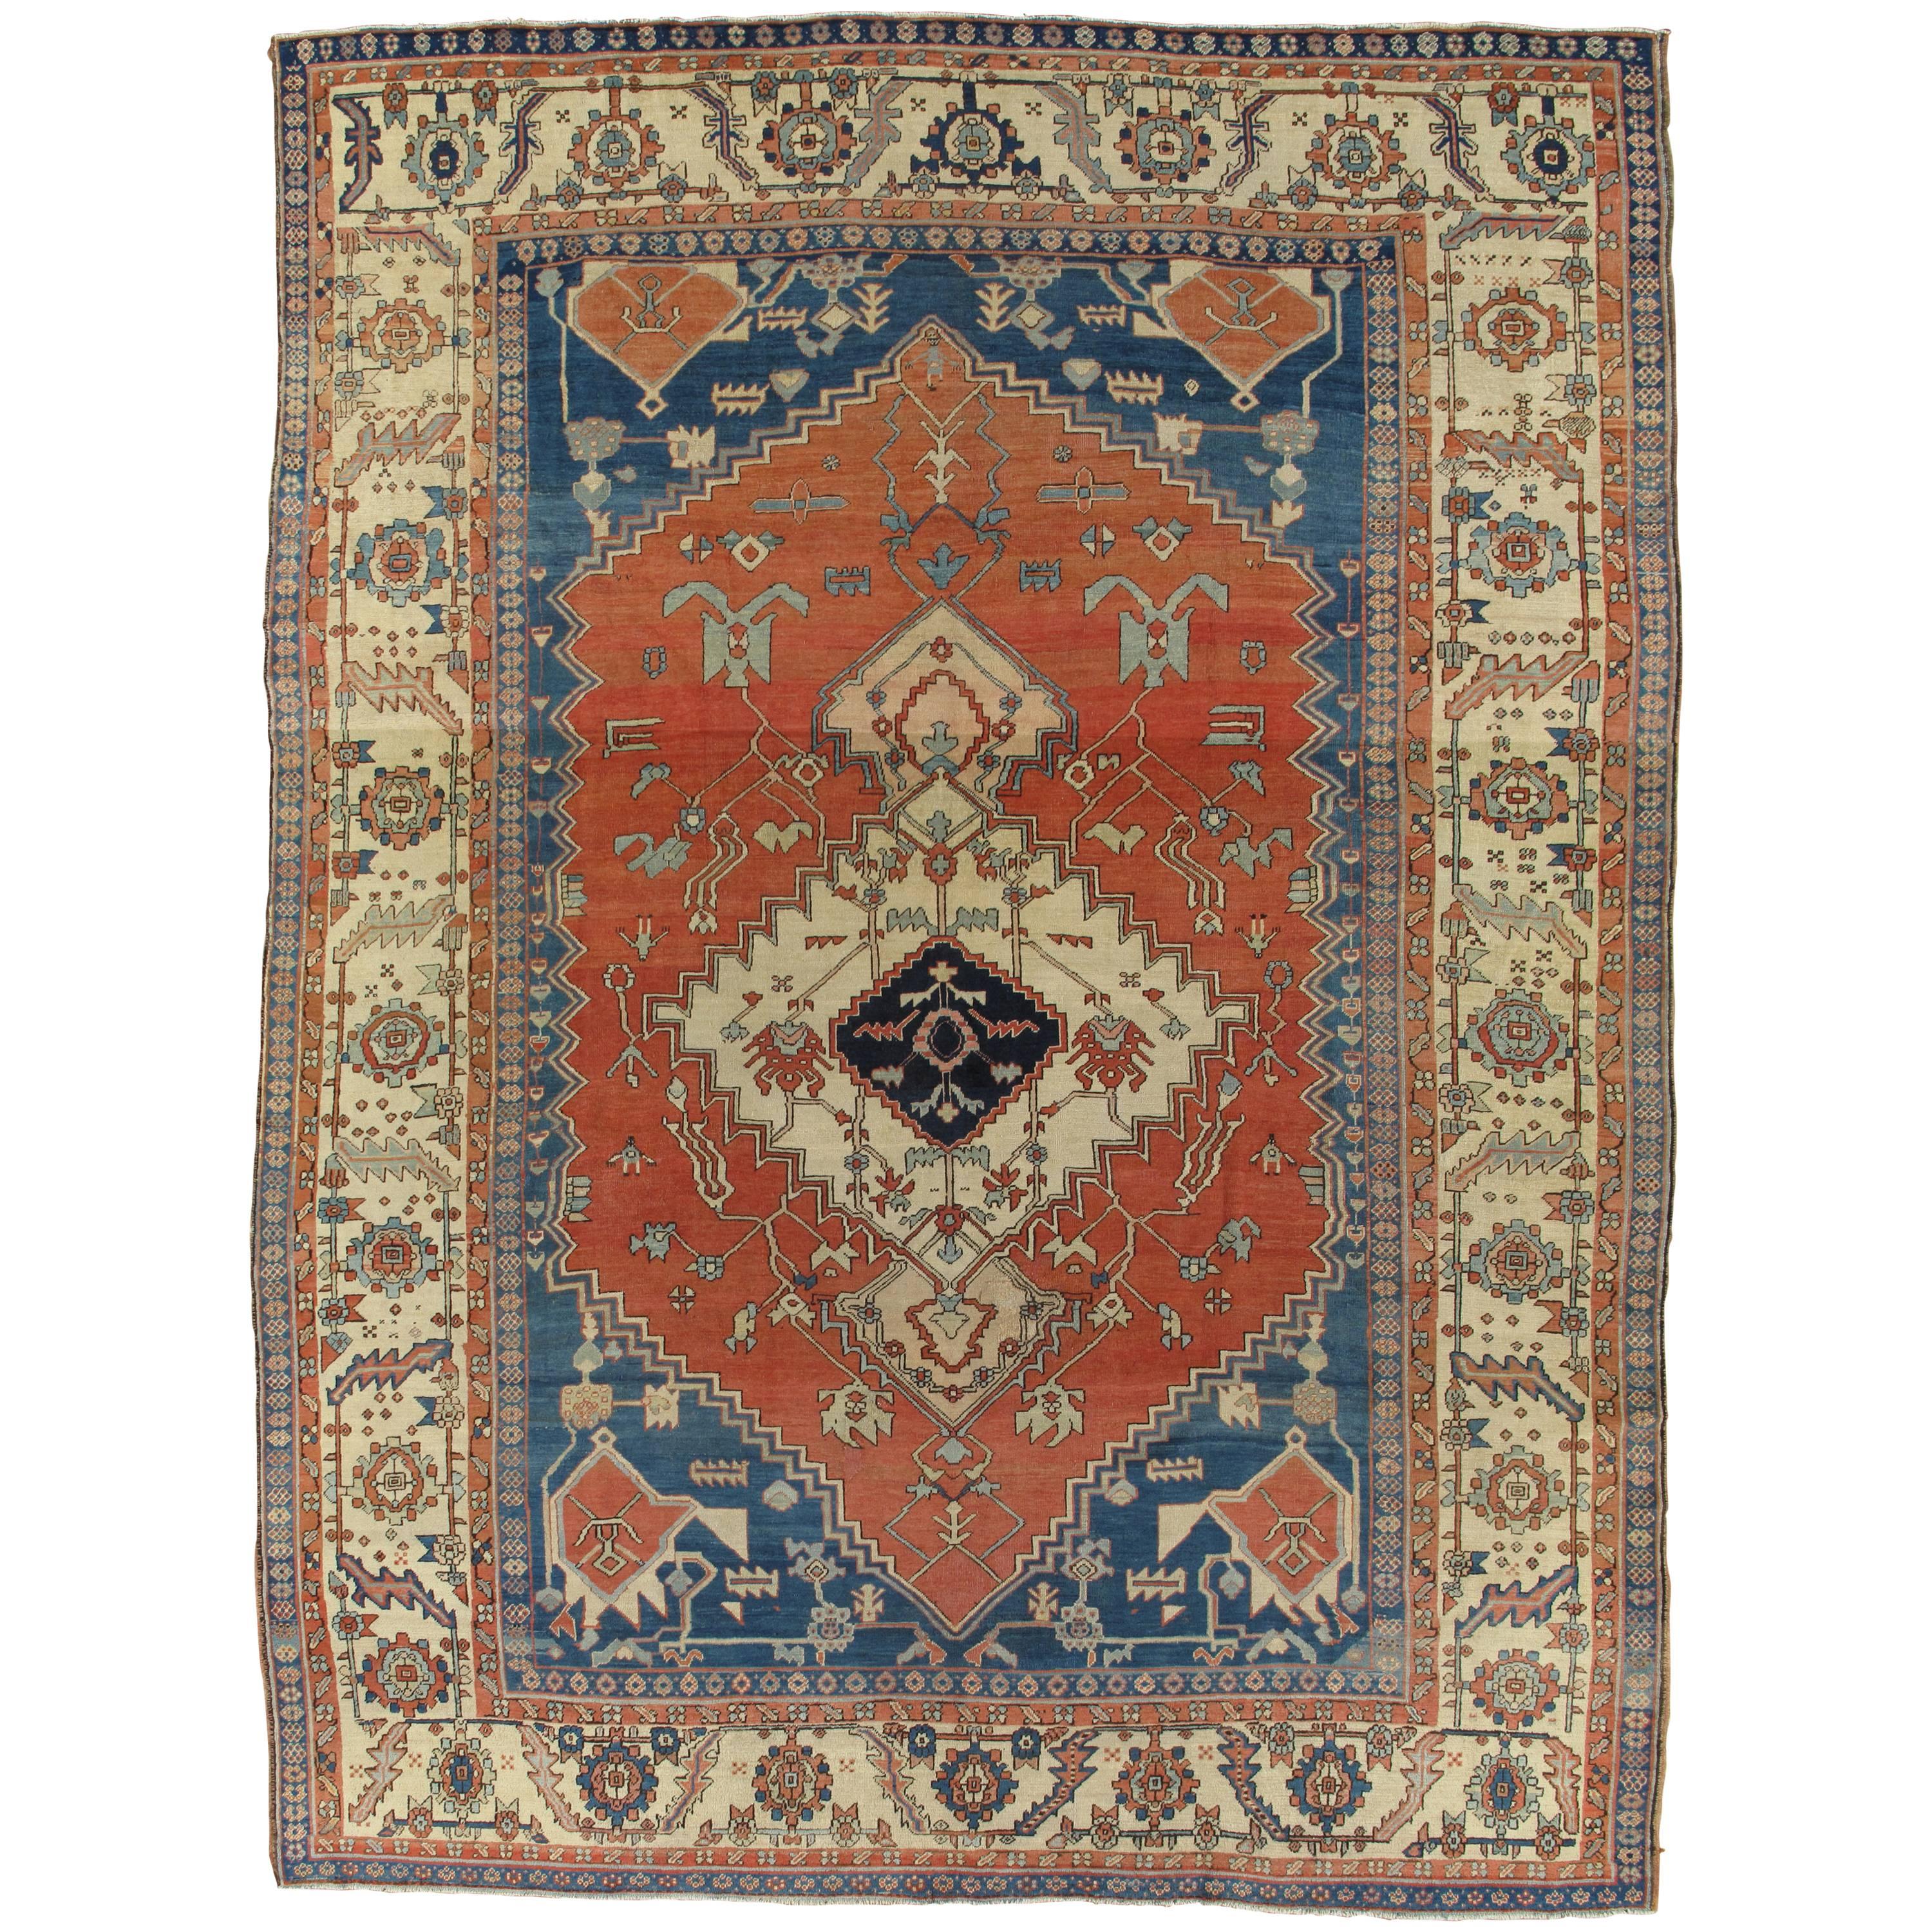 Antique Persian Serapi Carpet, Handmade Rug Ivory Border, Light Blue, Rust Ivory